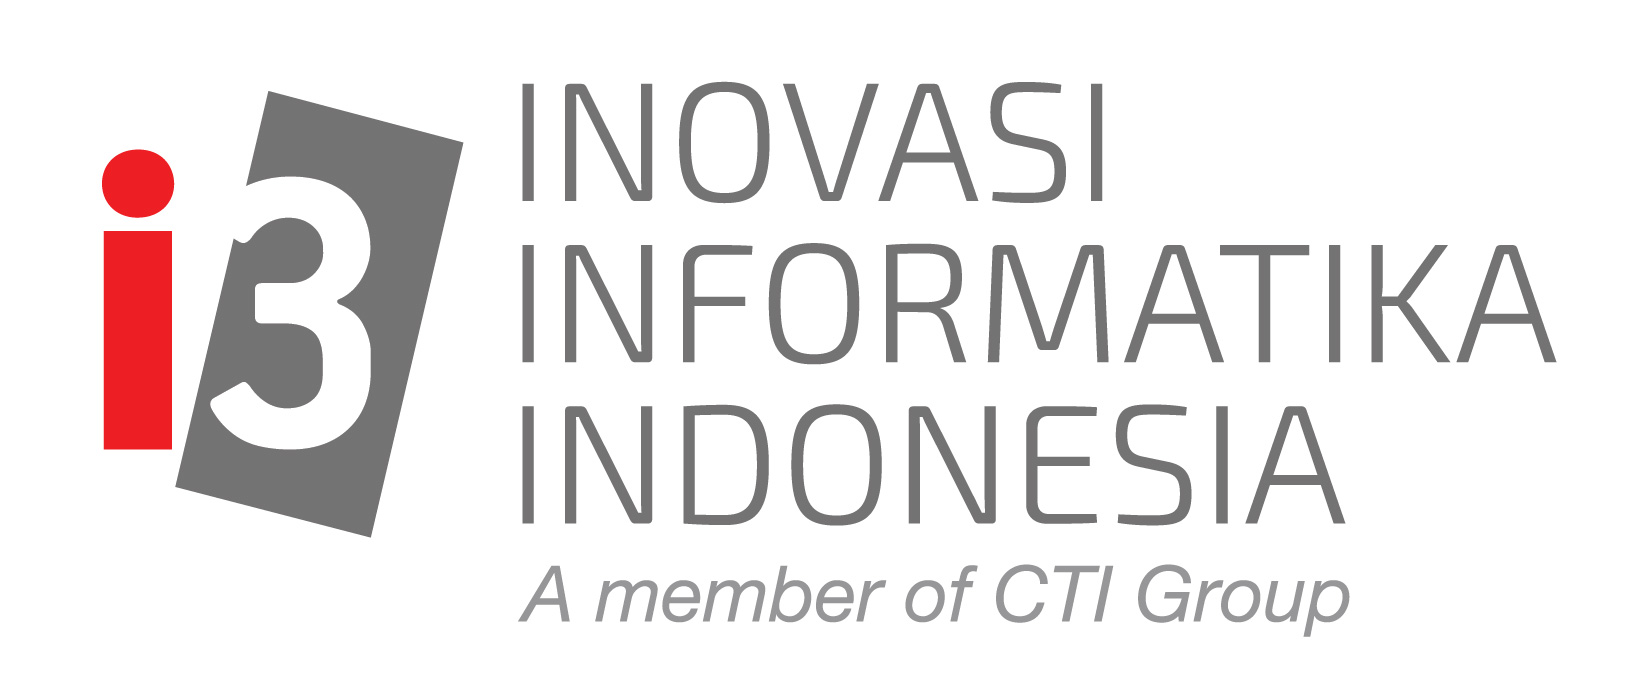 Inovasi Informatika Indonesia logo